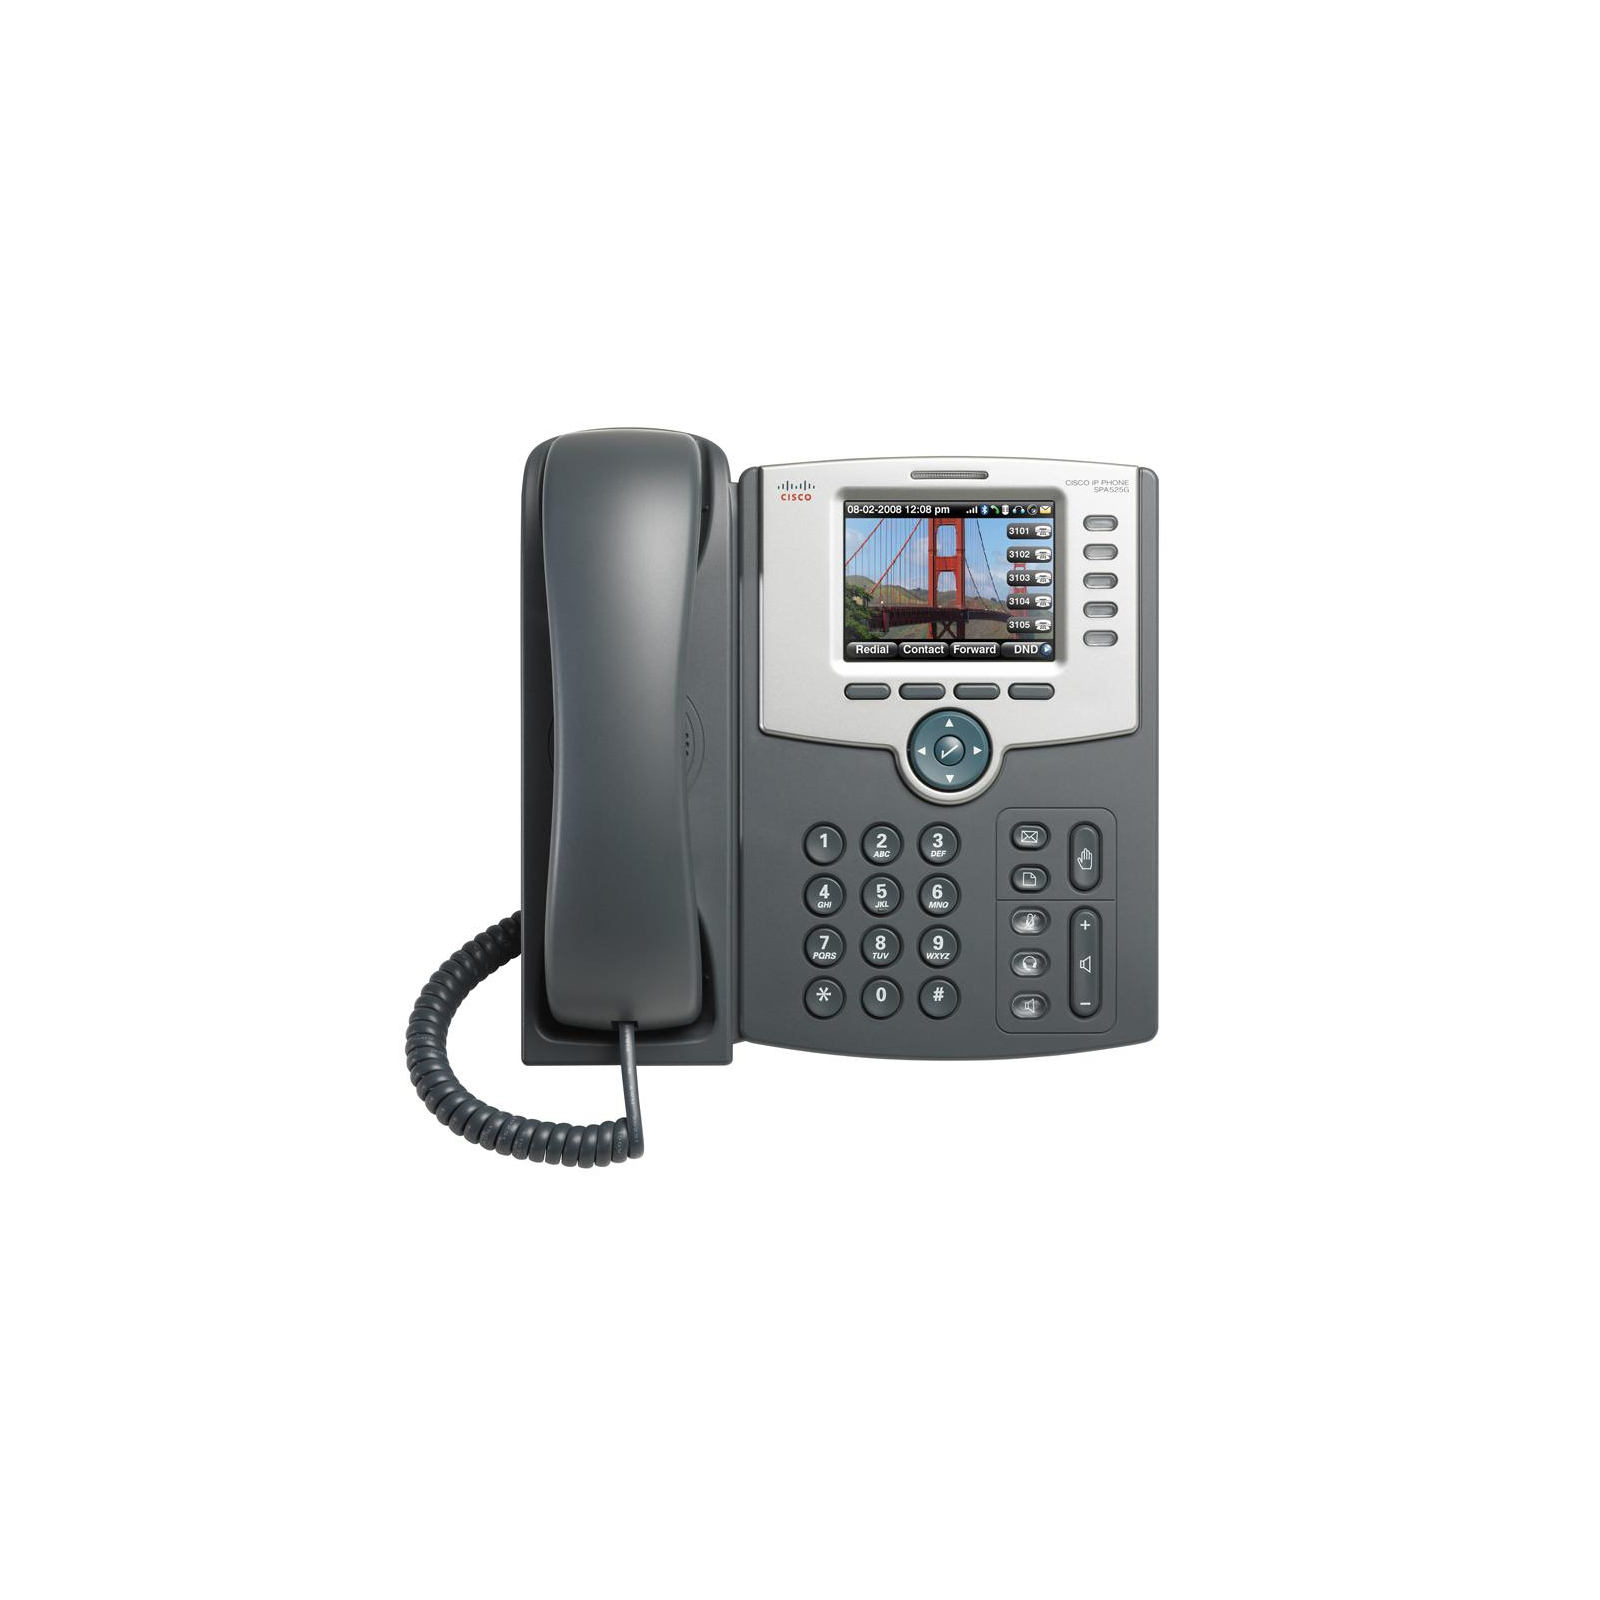 IP телефон Cisco SPA525 (SPA525G2) изображение 2